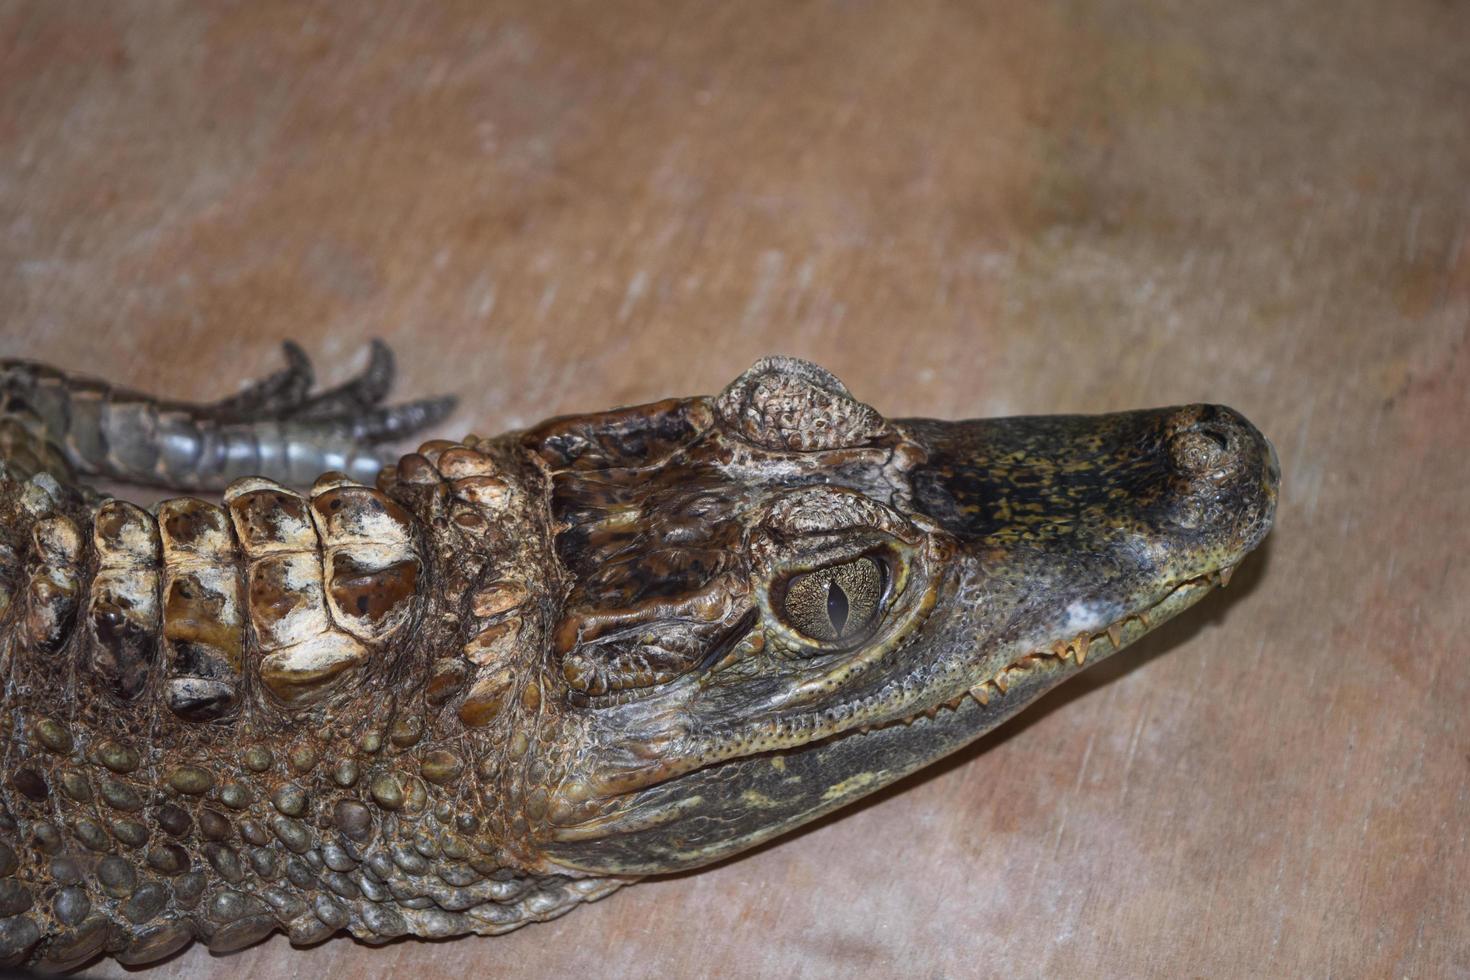 a head with scary crocodile or alligator eyes photo